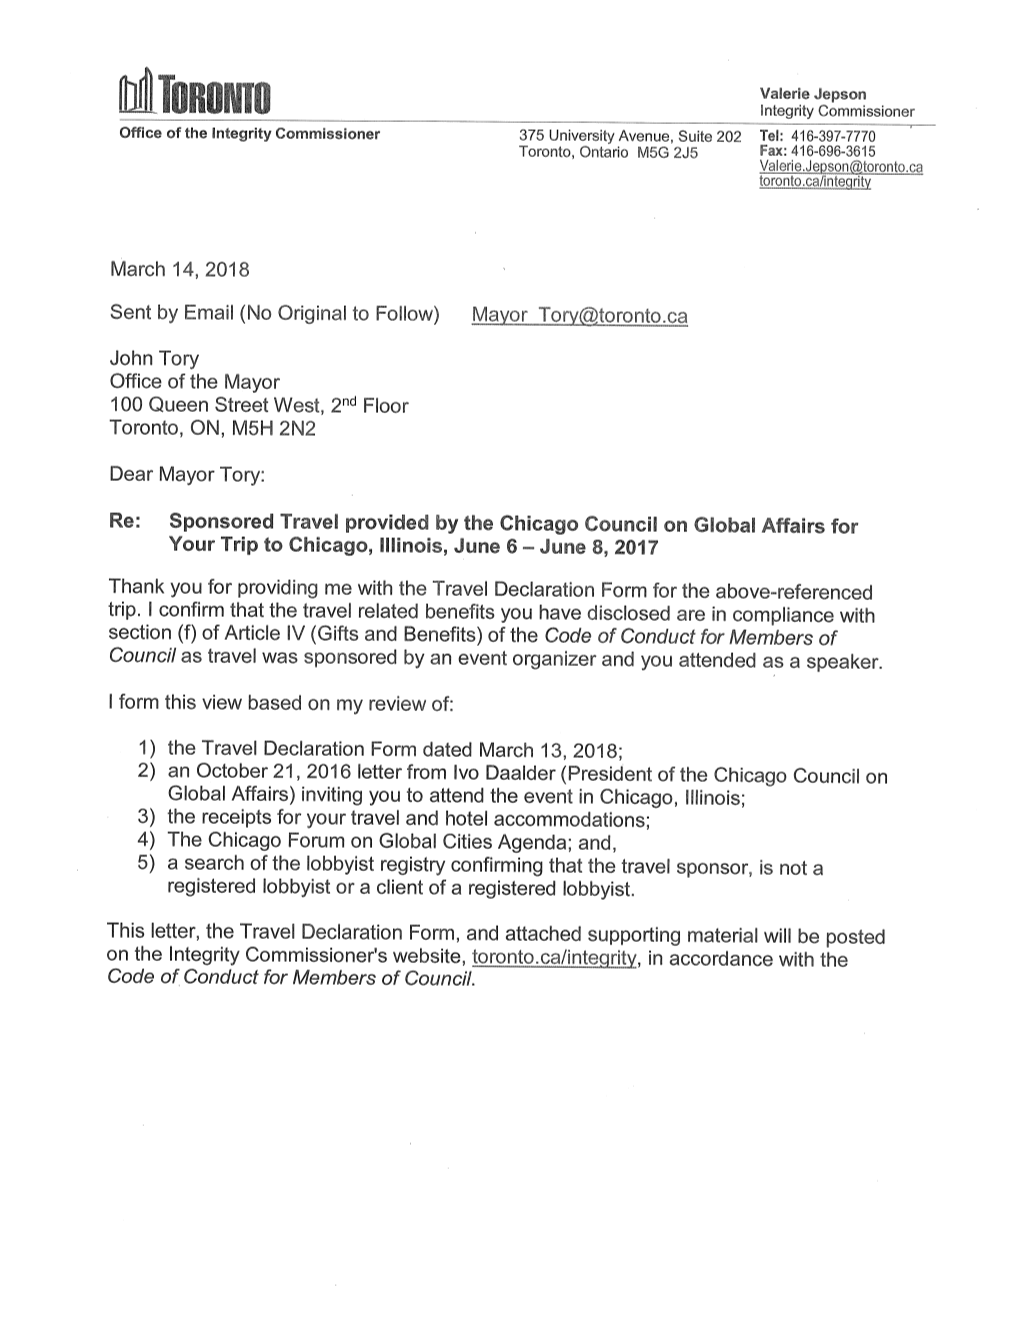 Travel Declaration Form: Mayor Tory (Chicago, USA)